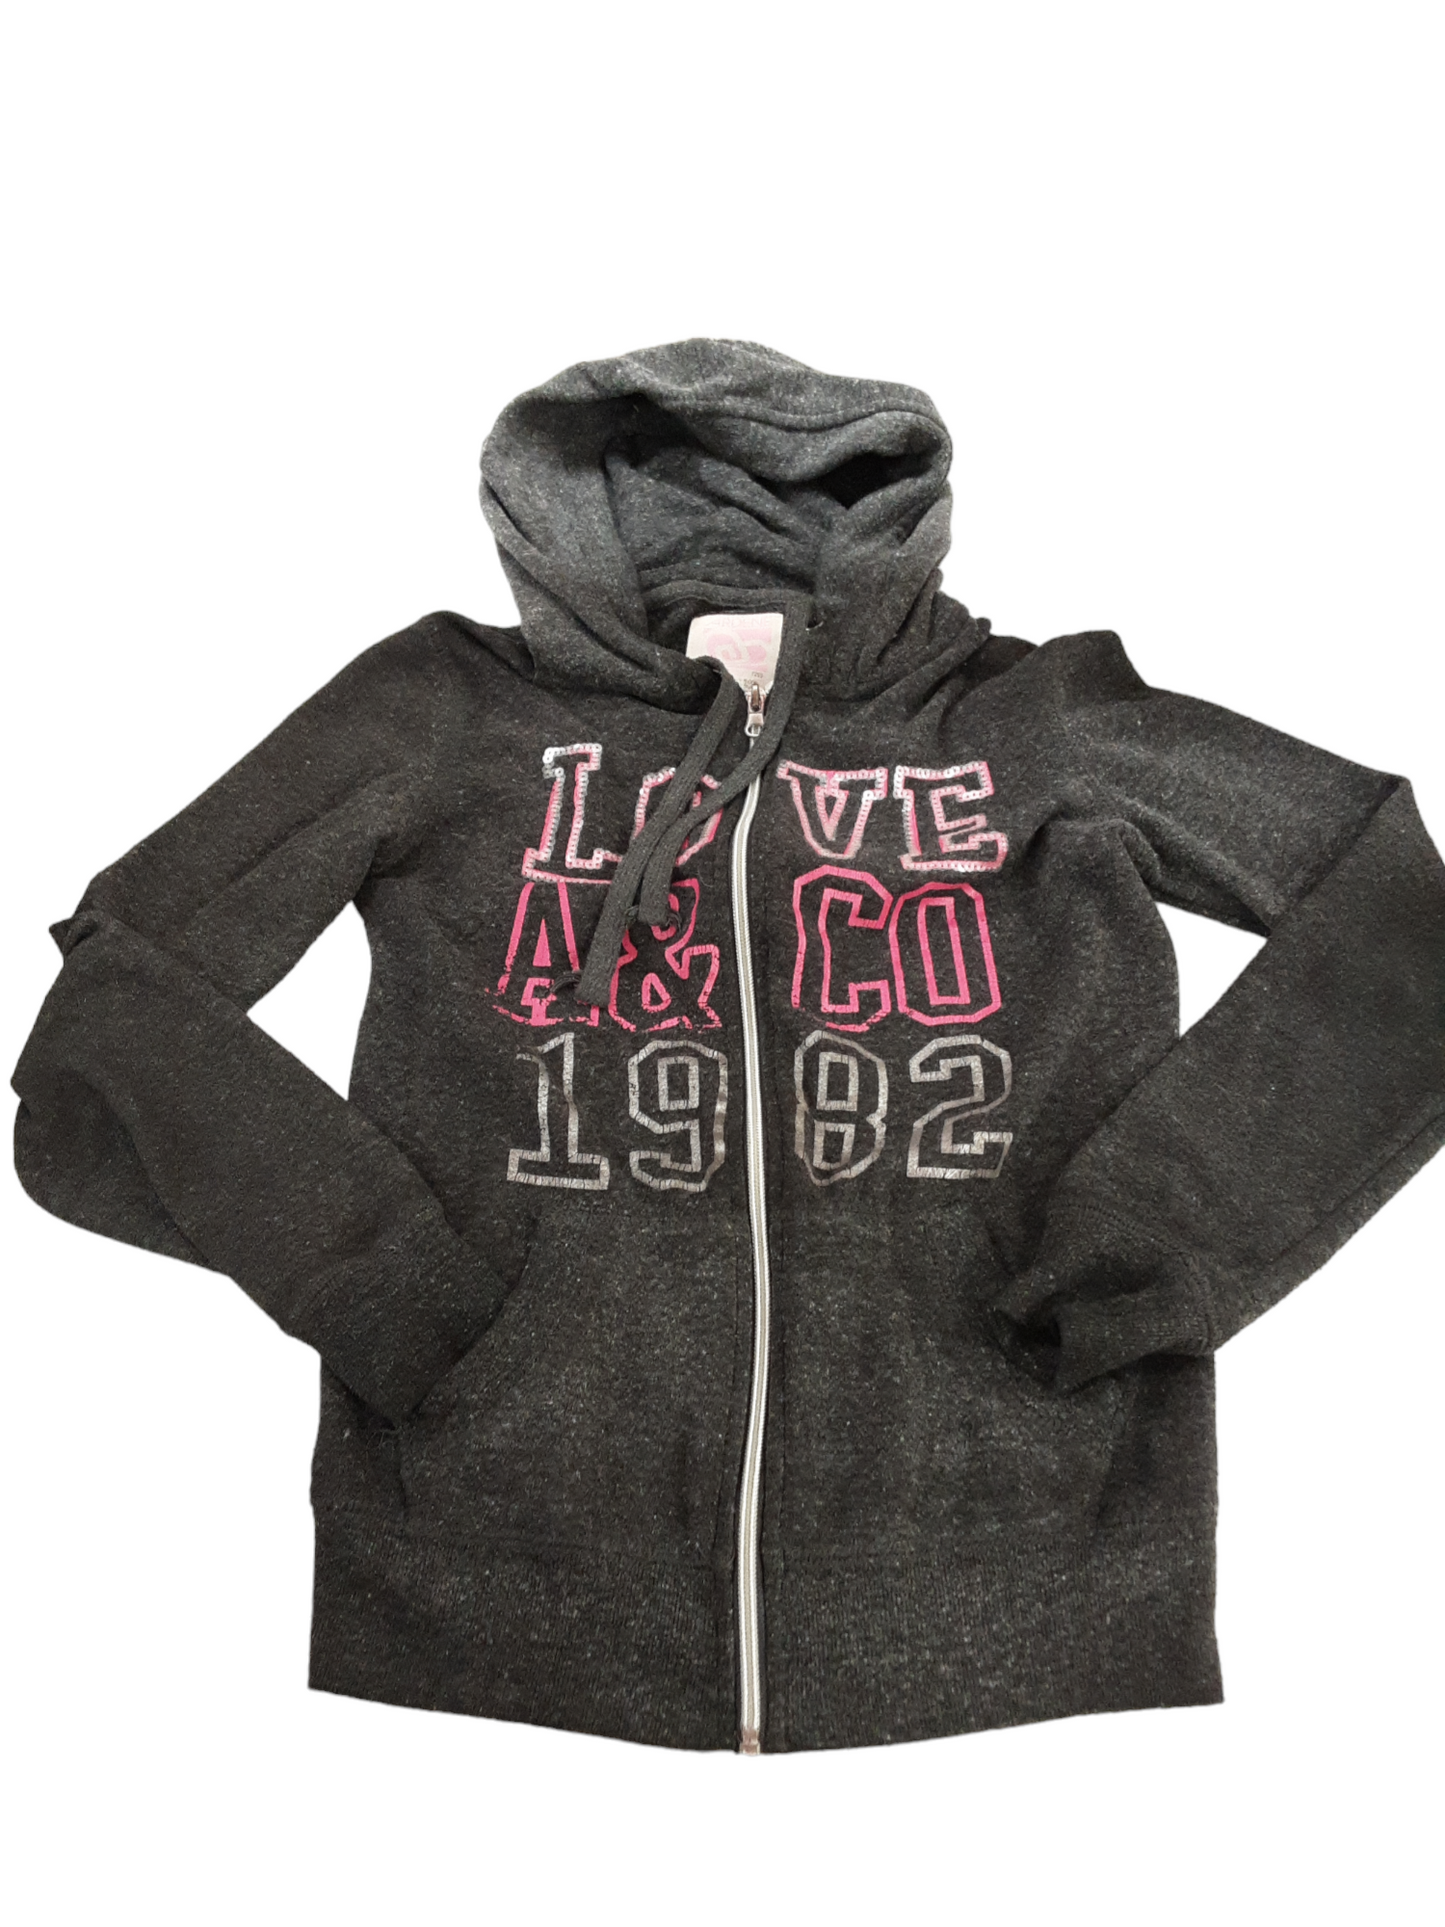 LOVE grey hoodie size 12